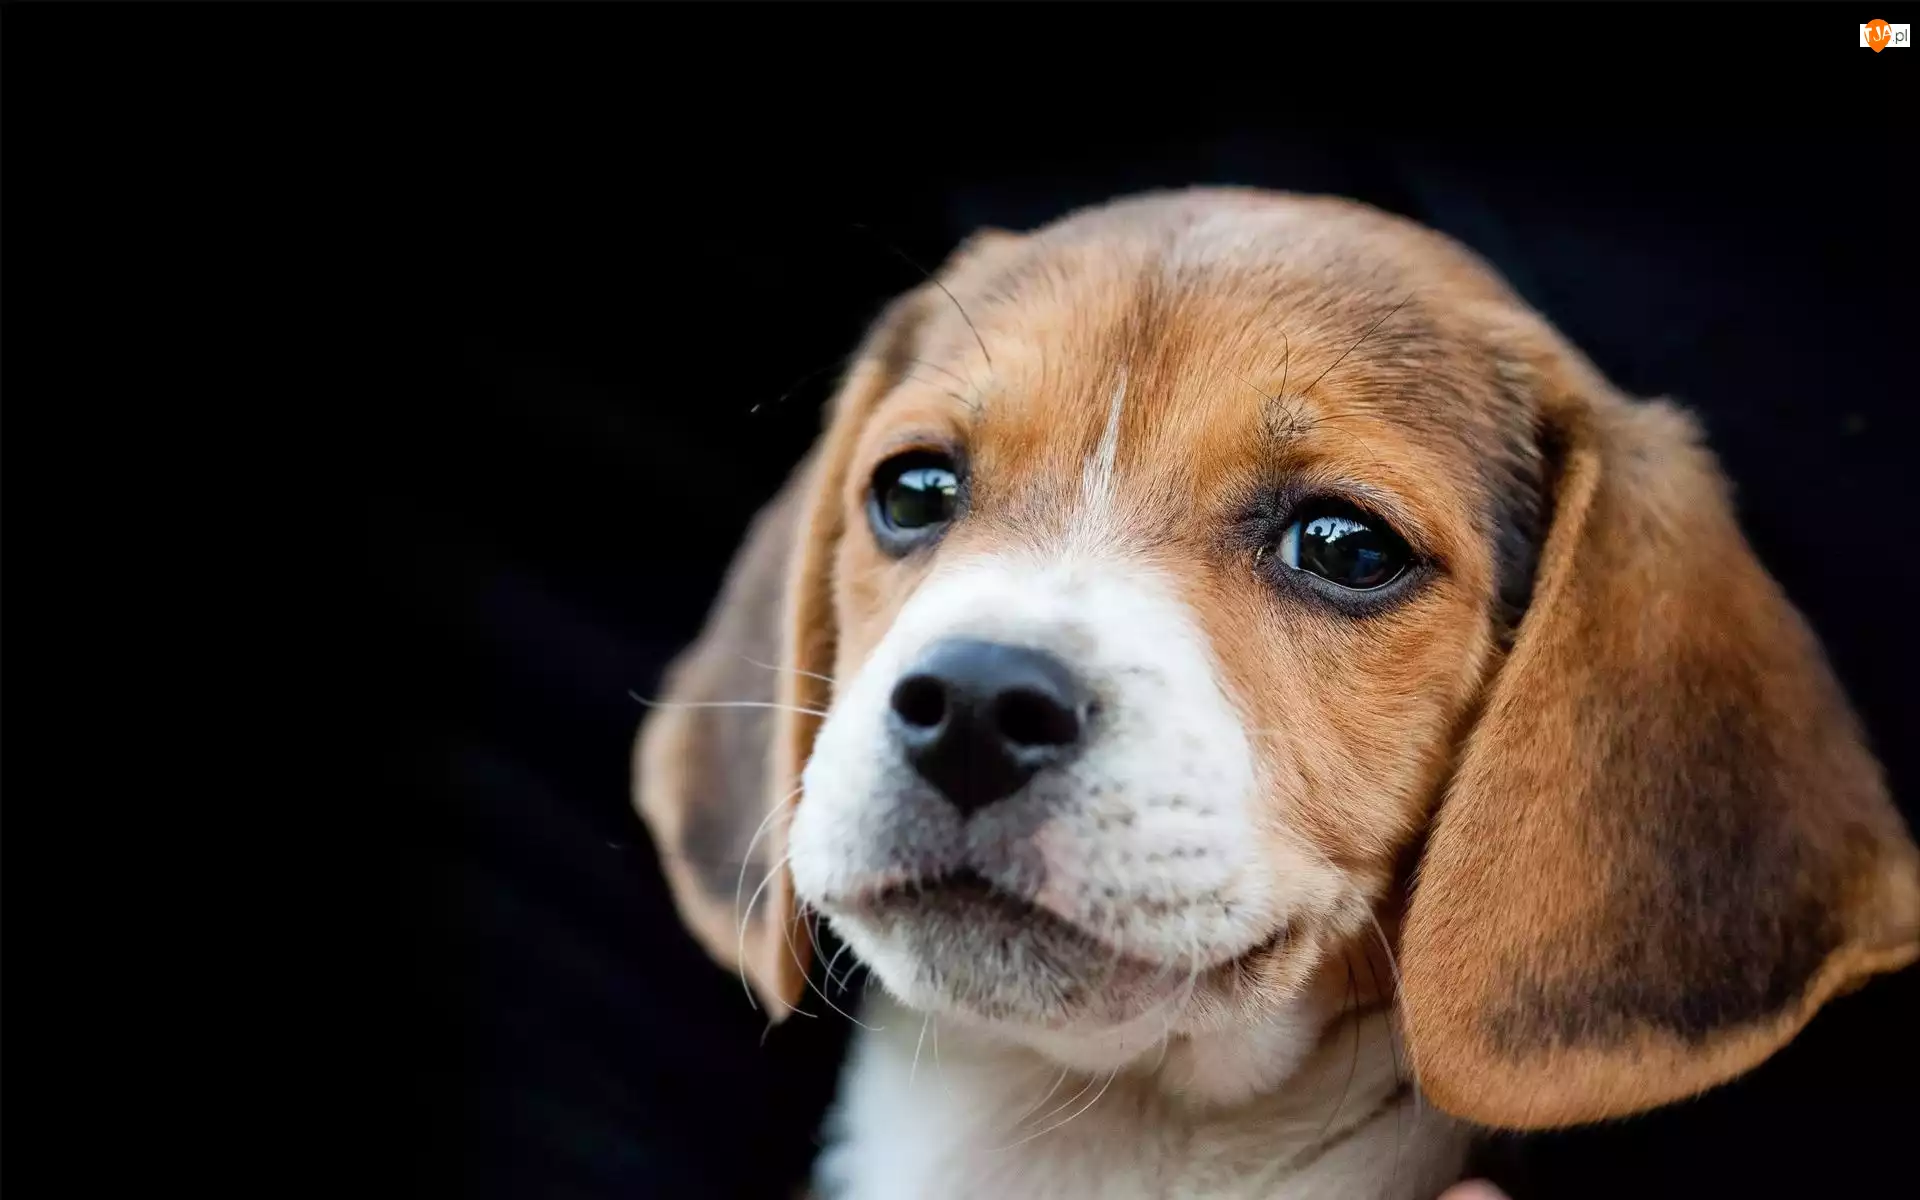 Portret, Beagle